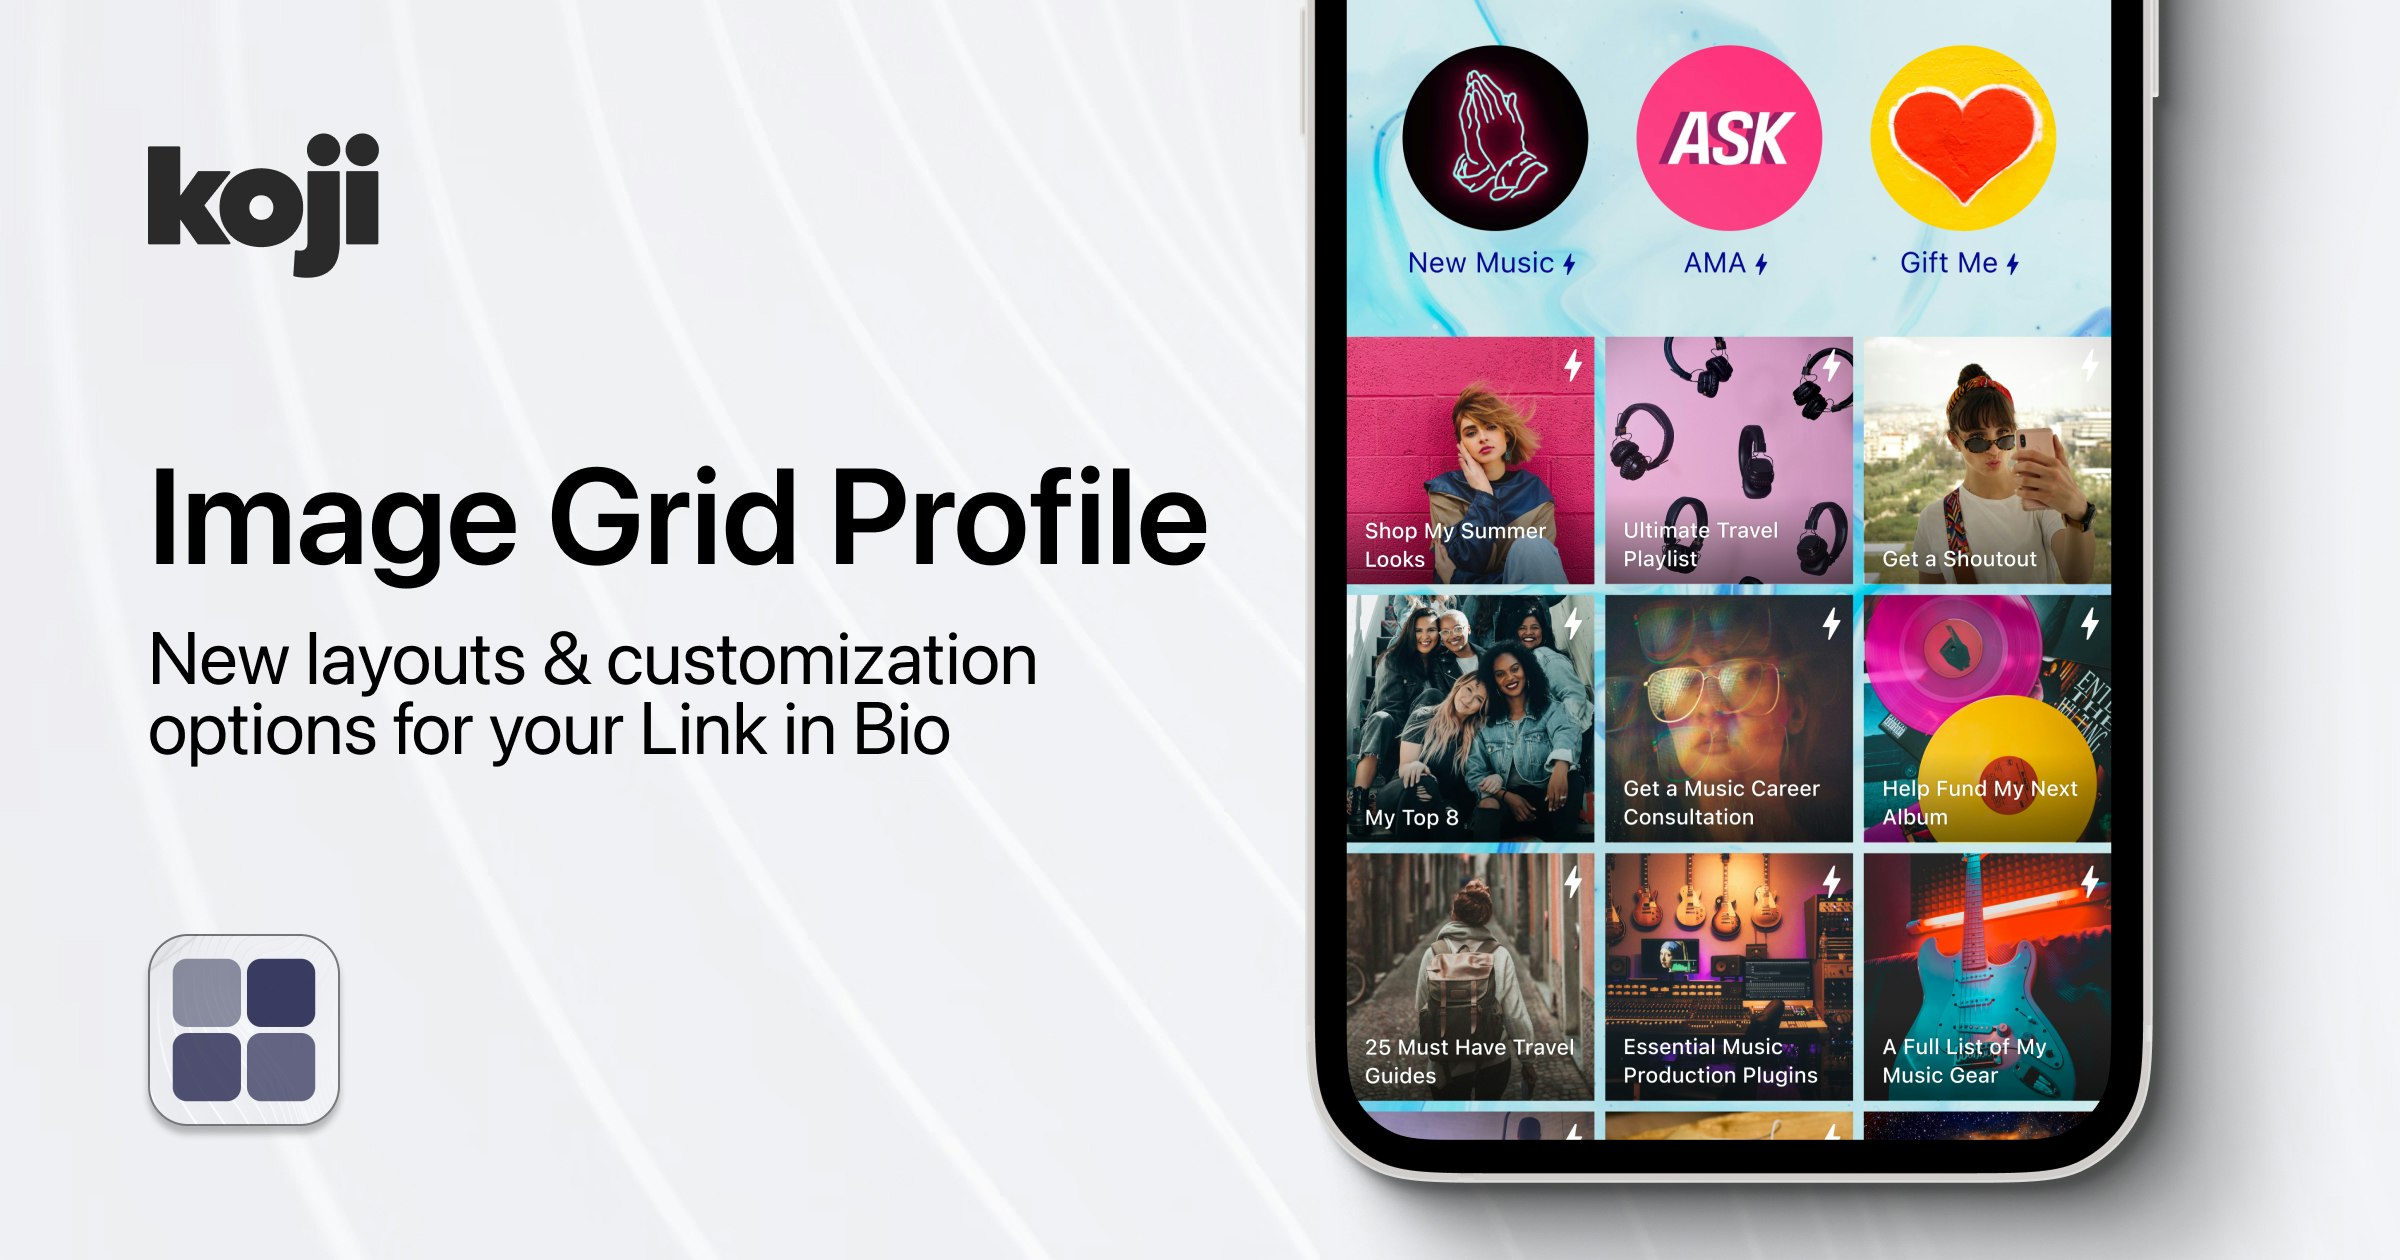 Creator Economy Platform Koji Announces “Image Grid Profile”